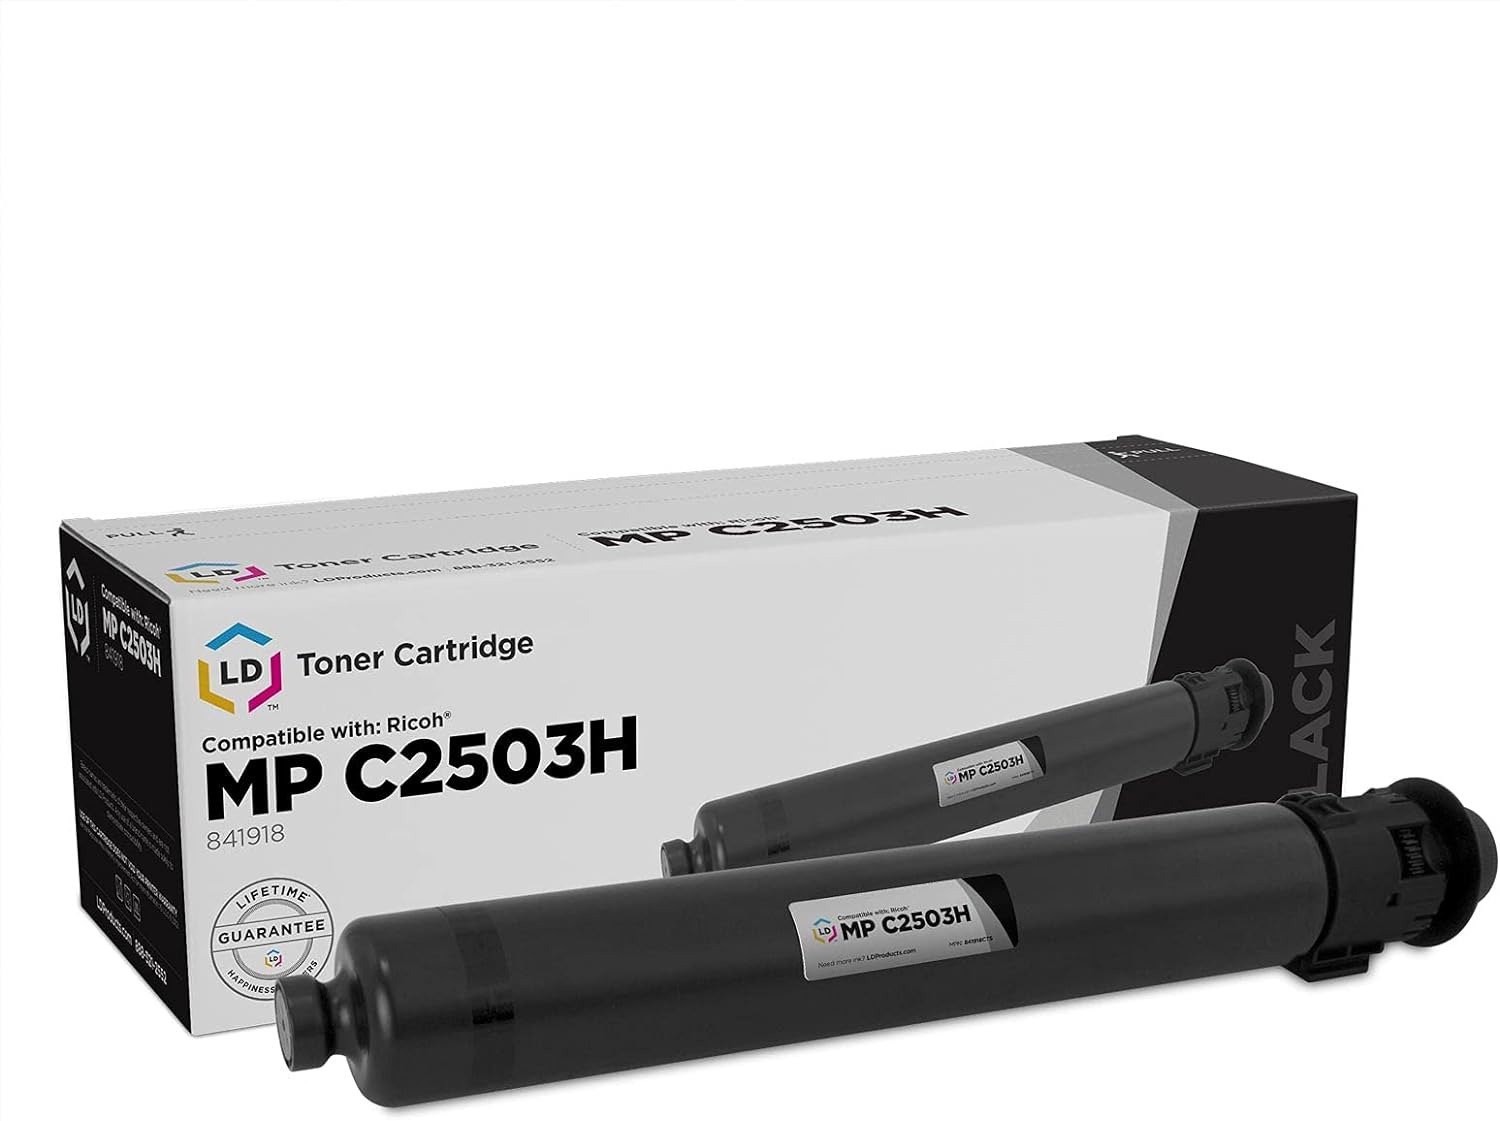 LD Compatible Toner Cartridge Replacement for Ricoh 841918 MP C2503H (Black)